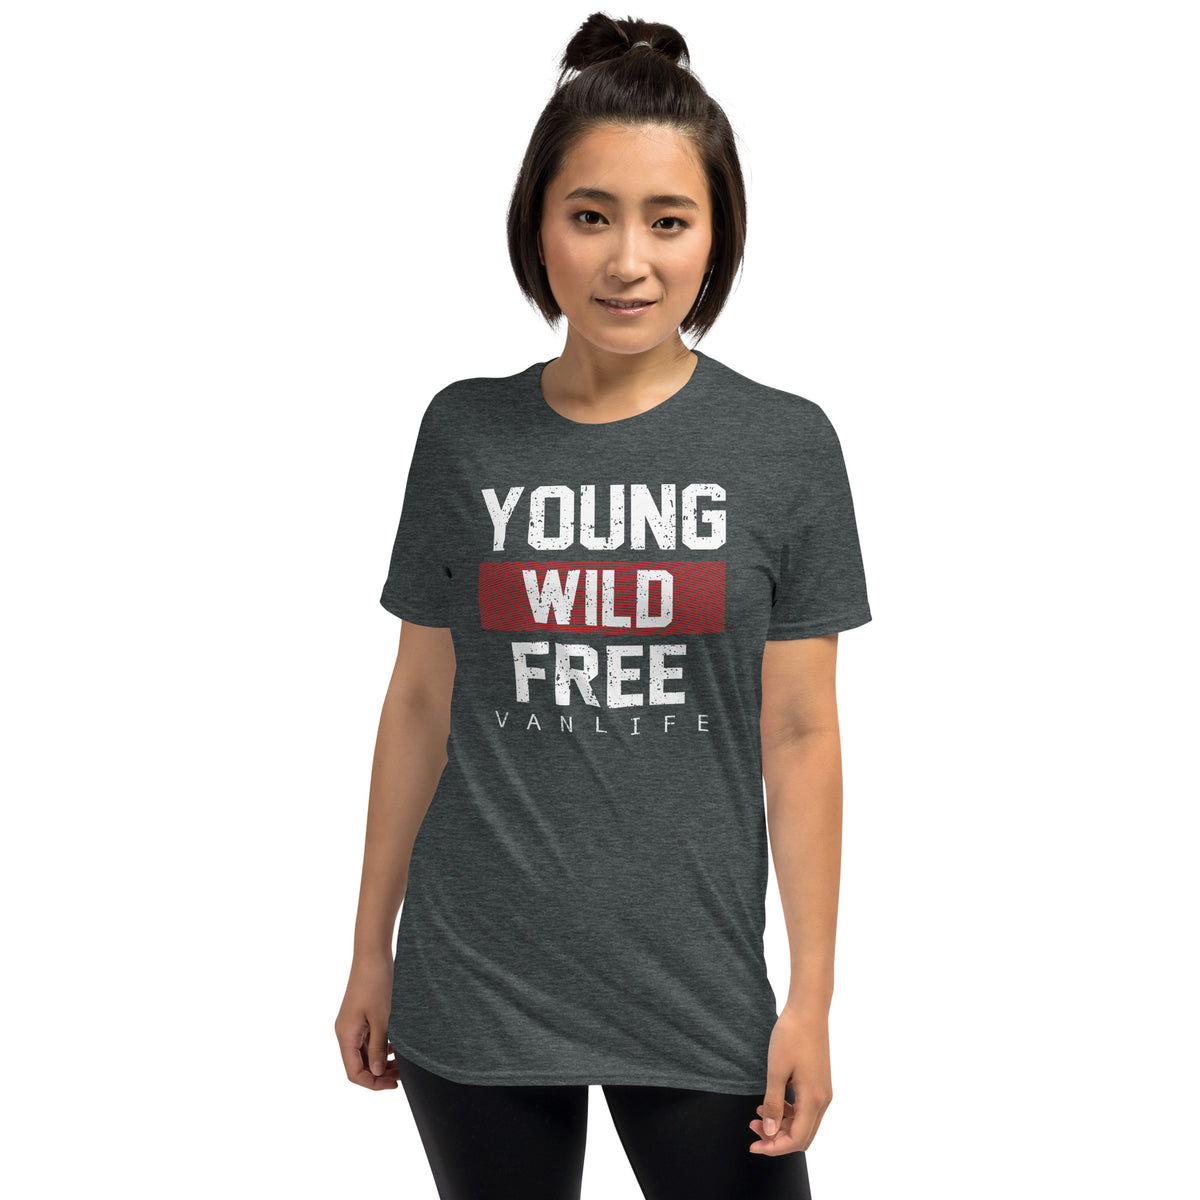 T-Shirt Van-Life Motiv " Young Wild Free Van Life"